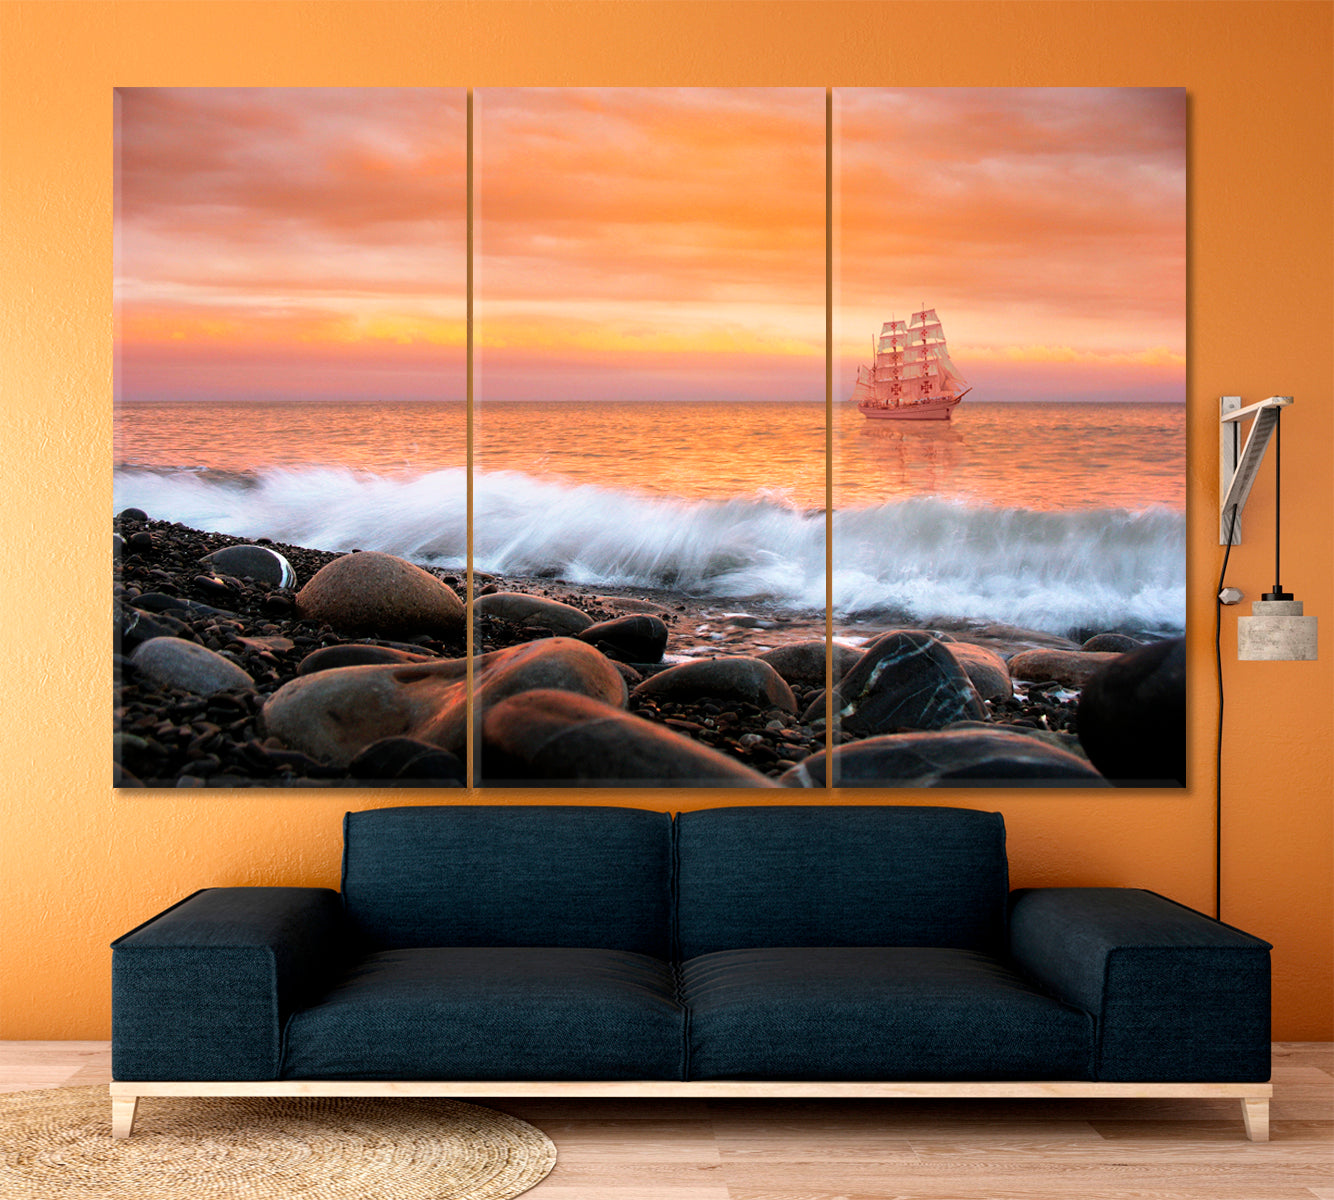 SCARLET SAILS Alone Ship Sea Waves Rocks Sky Beautiful Landscape Canvas Print Scenery Landscape Fine Art Print Artesty 3 panels 36" x 24" 